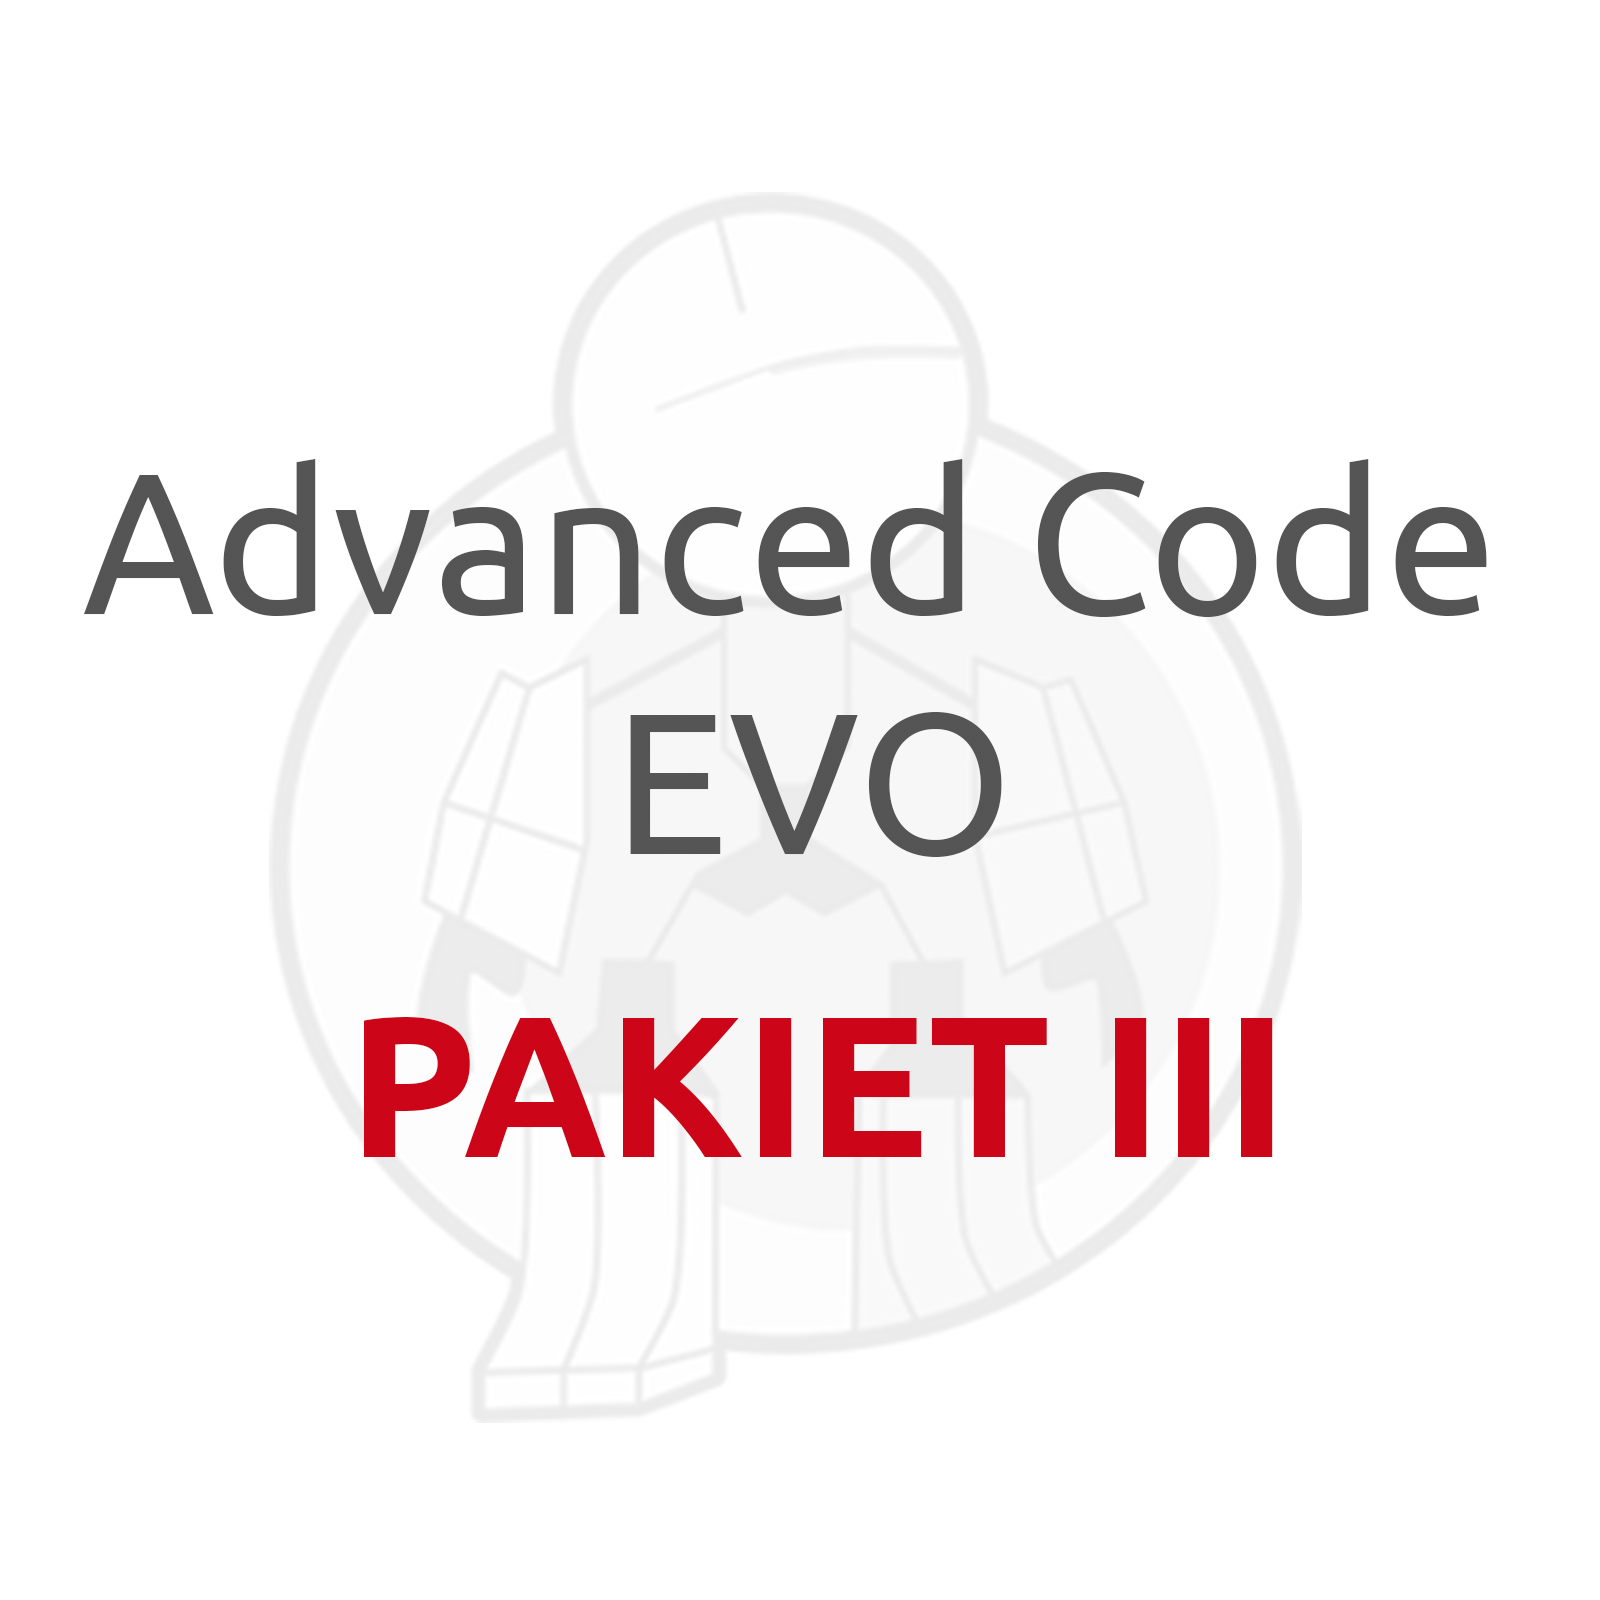 advanced code evo pakiet 3